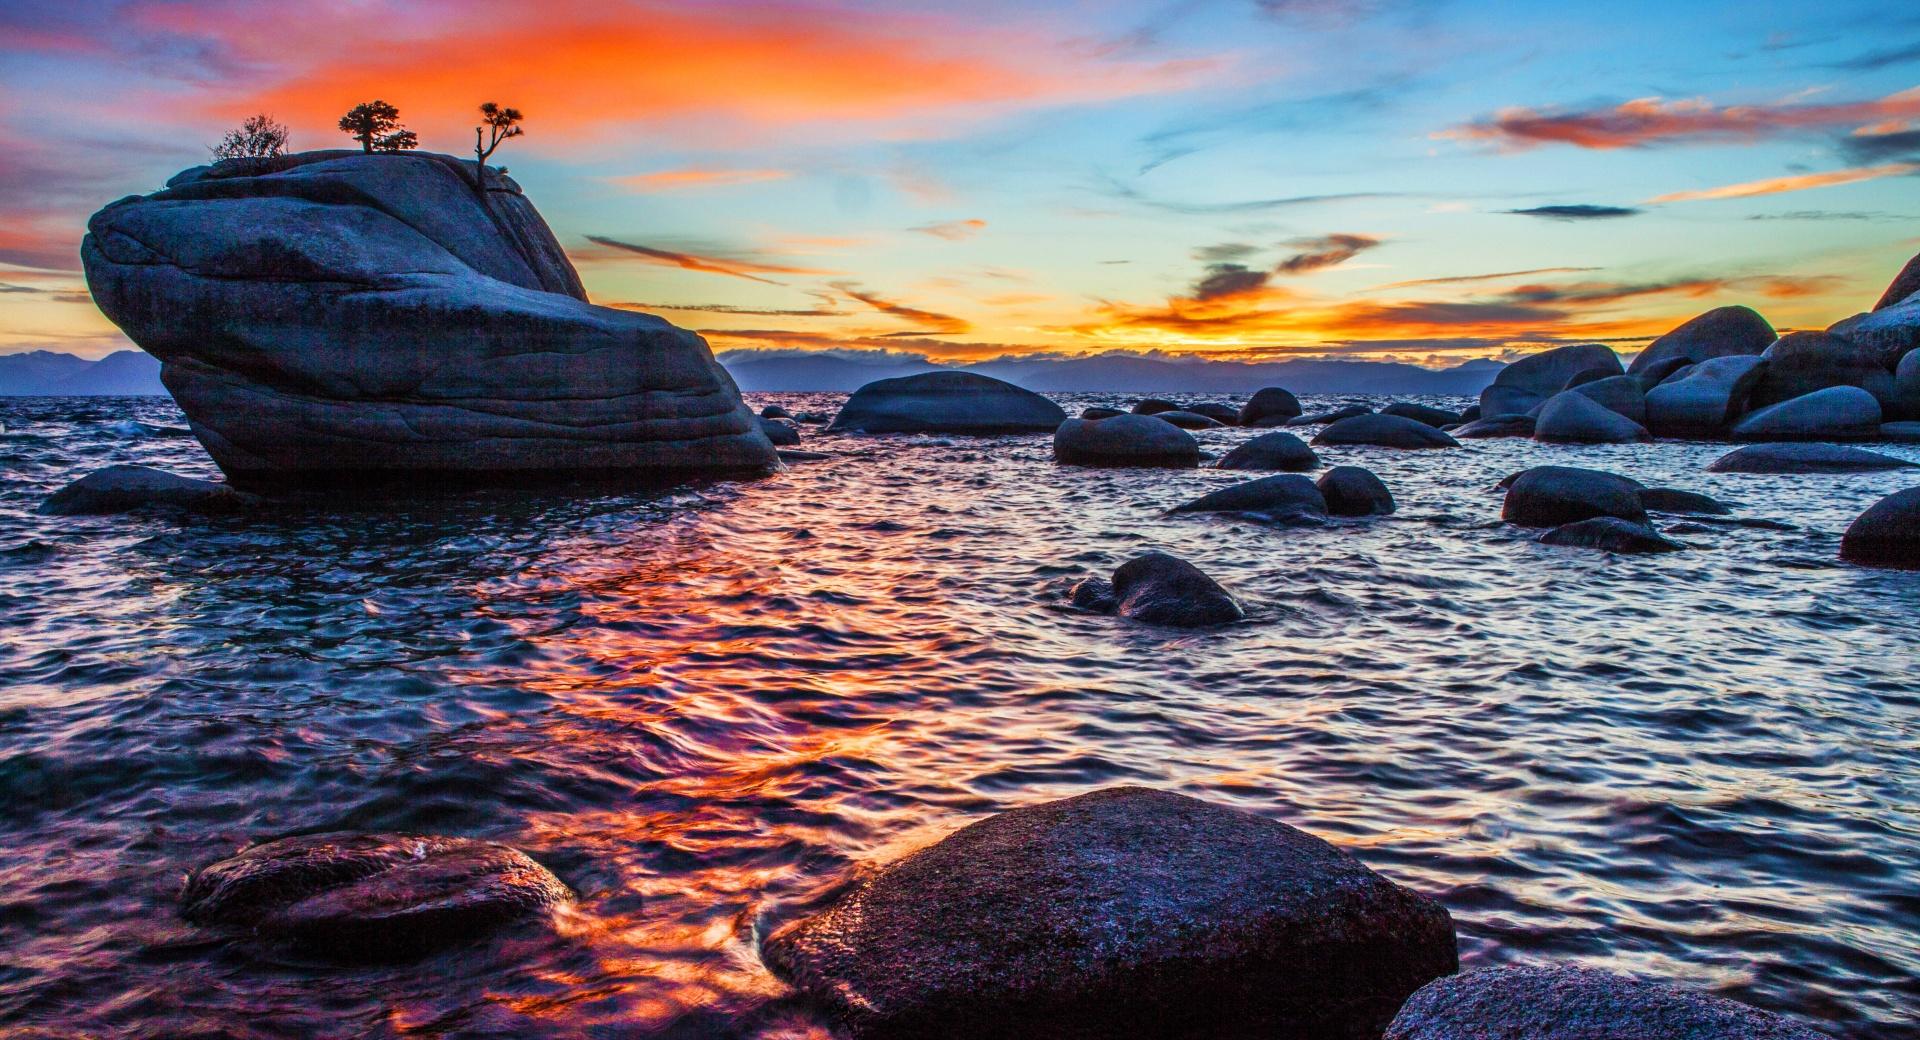 Bonsai Rock Sunset at Lake Tahoe wallpapers HD quality